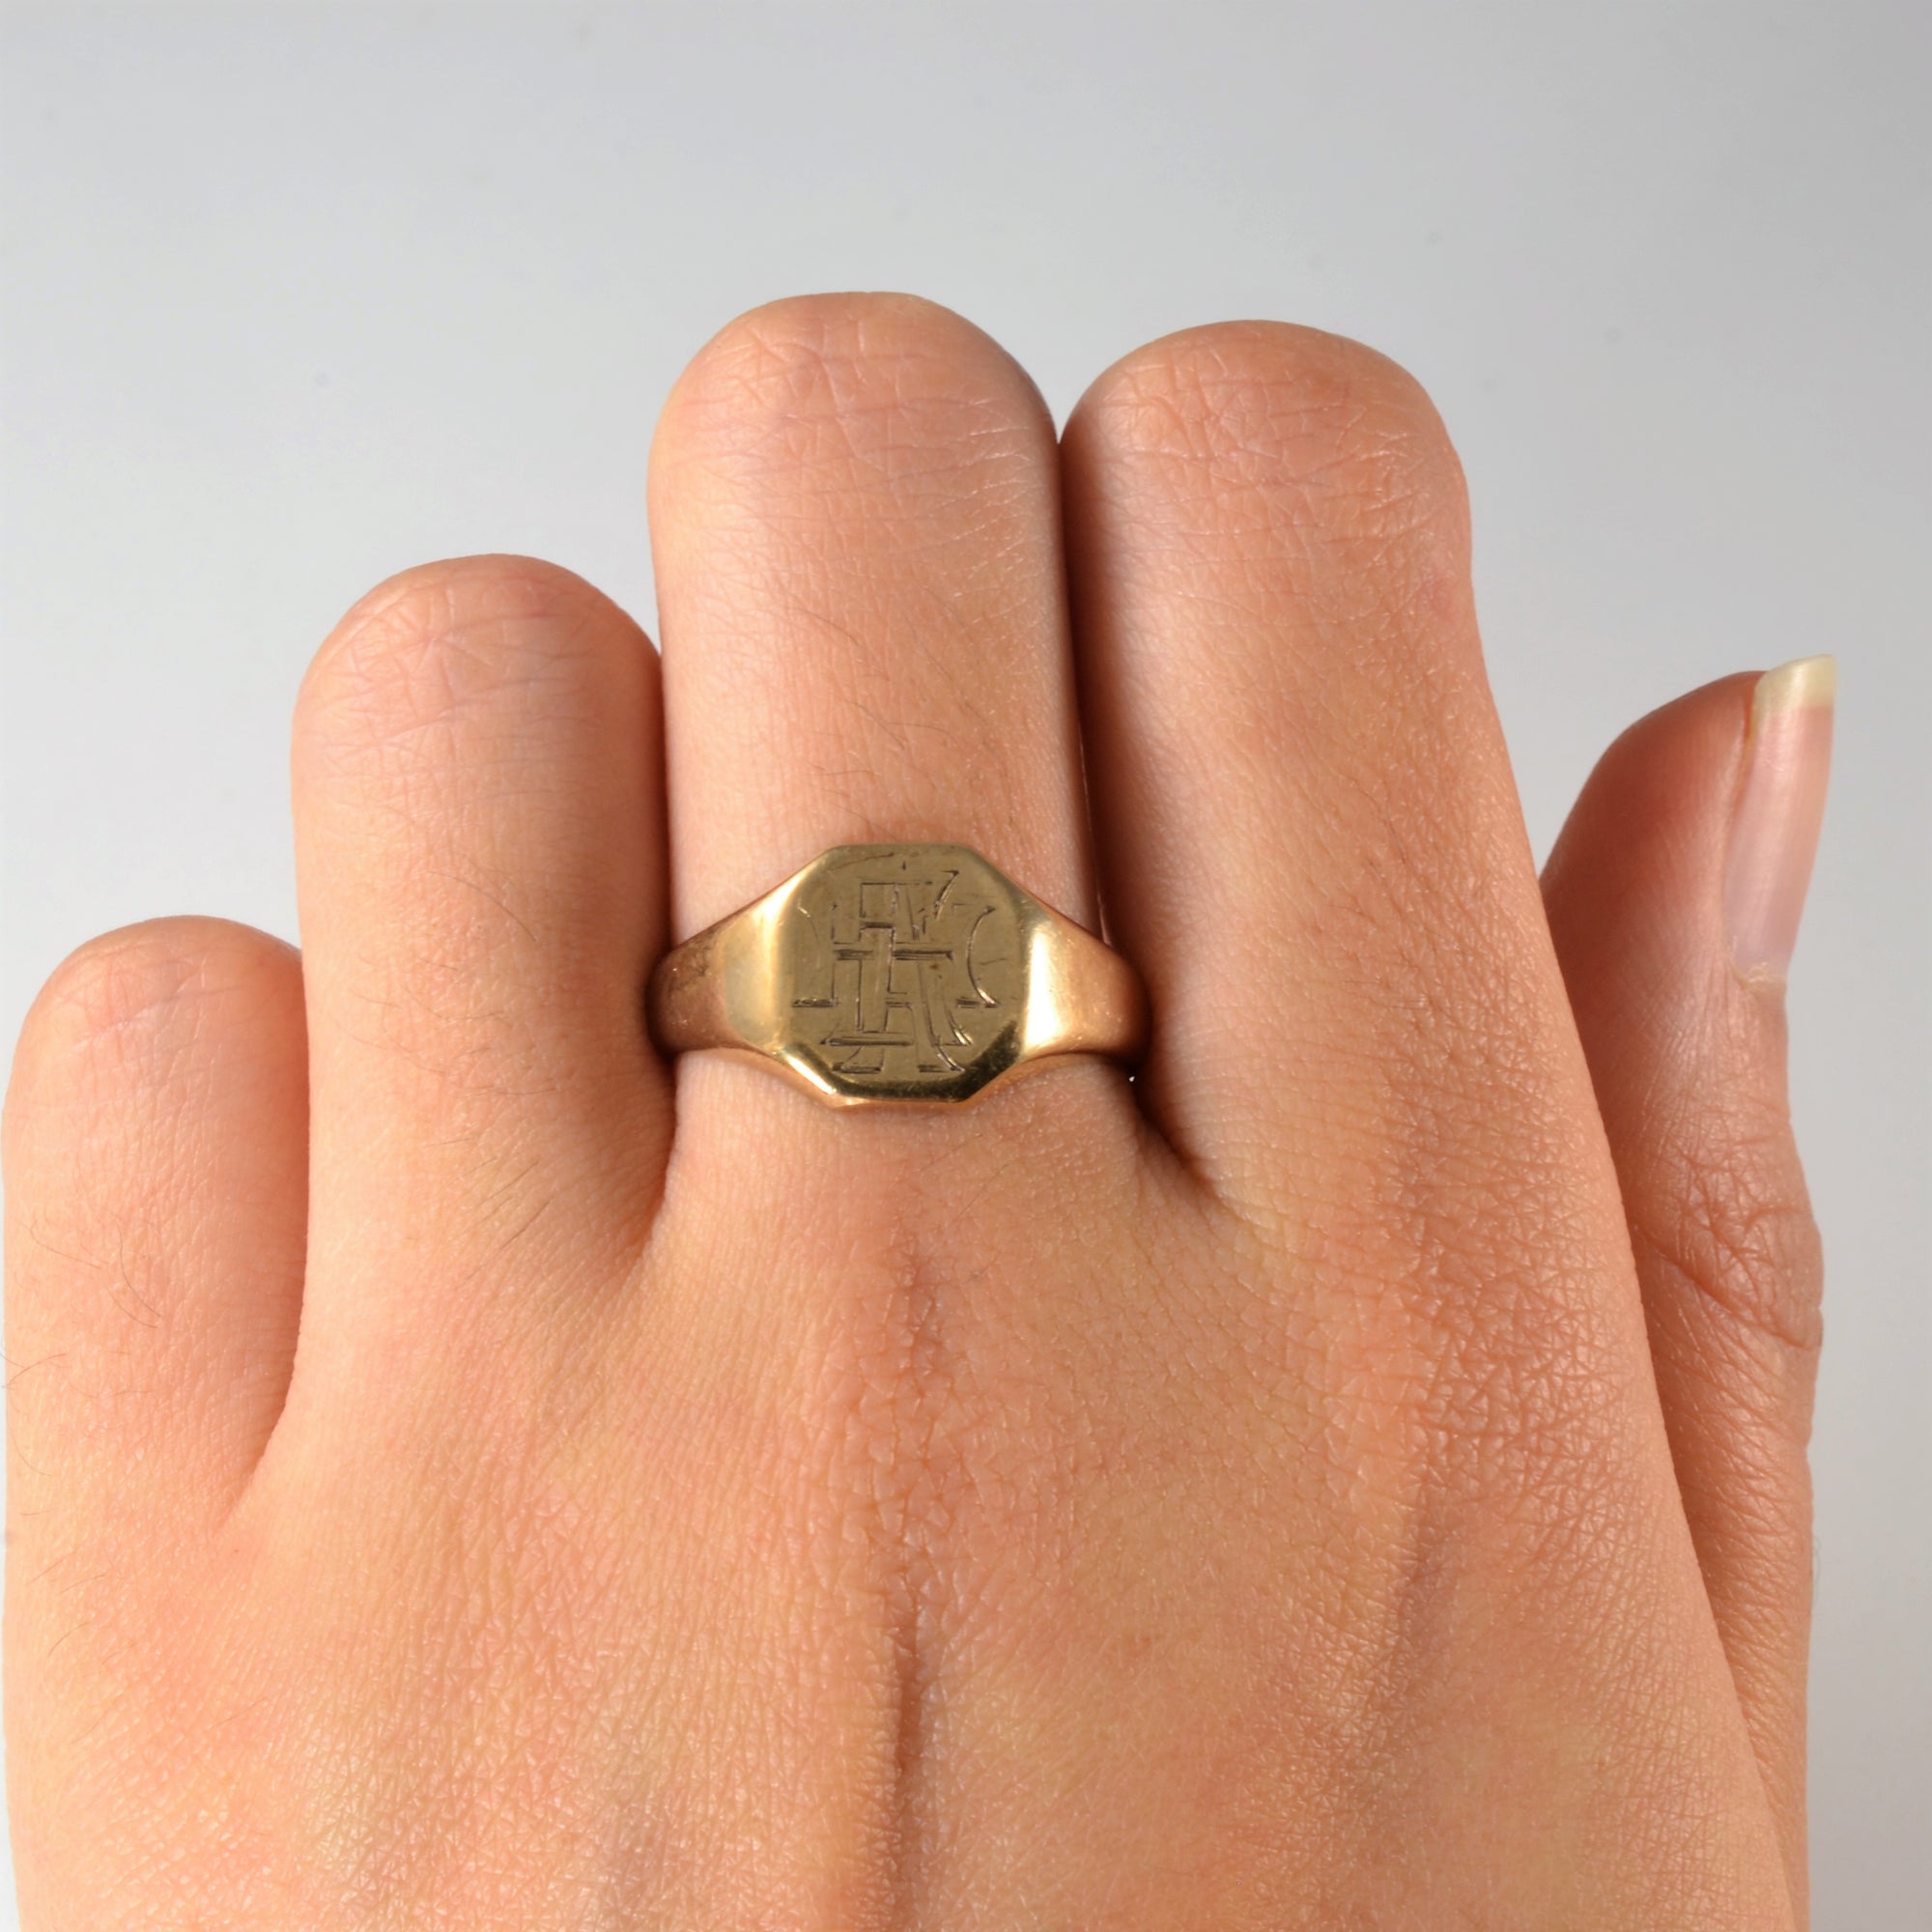 1940s Signet Ring | SZ 9.25 |